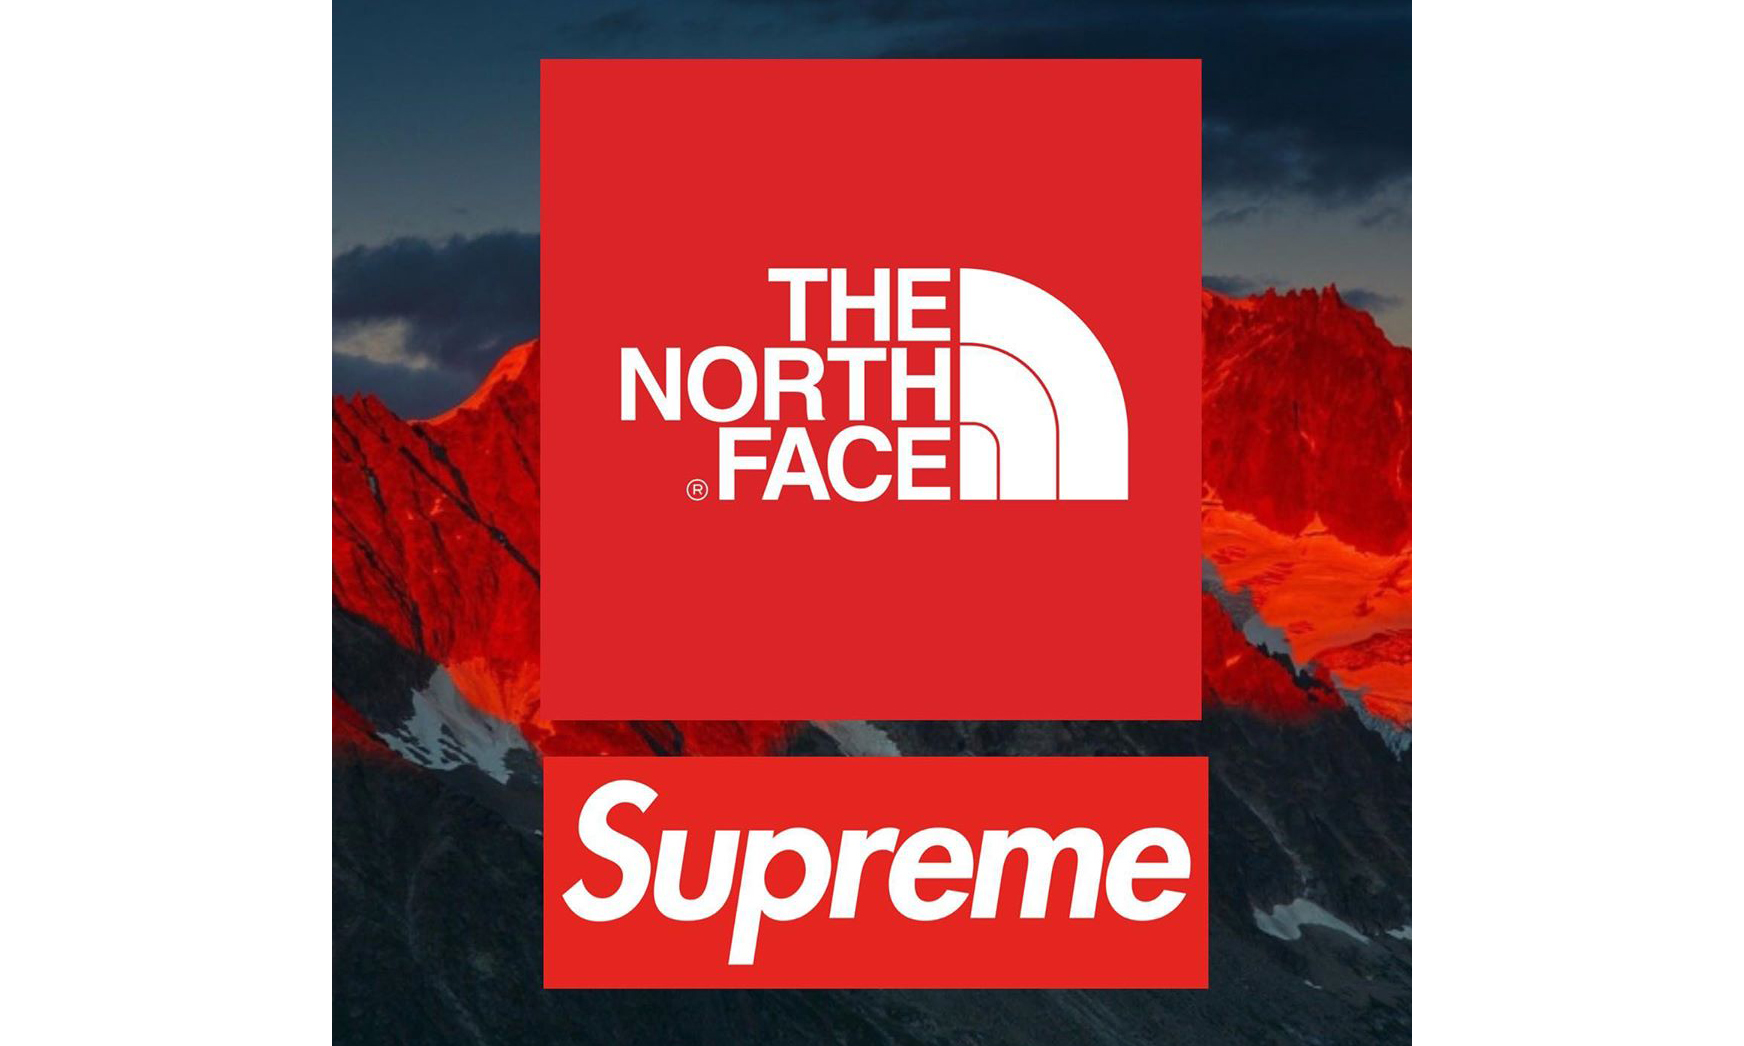 THE NORTH FACE x Supreme 新辑联名即将释出